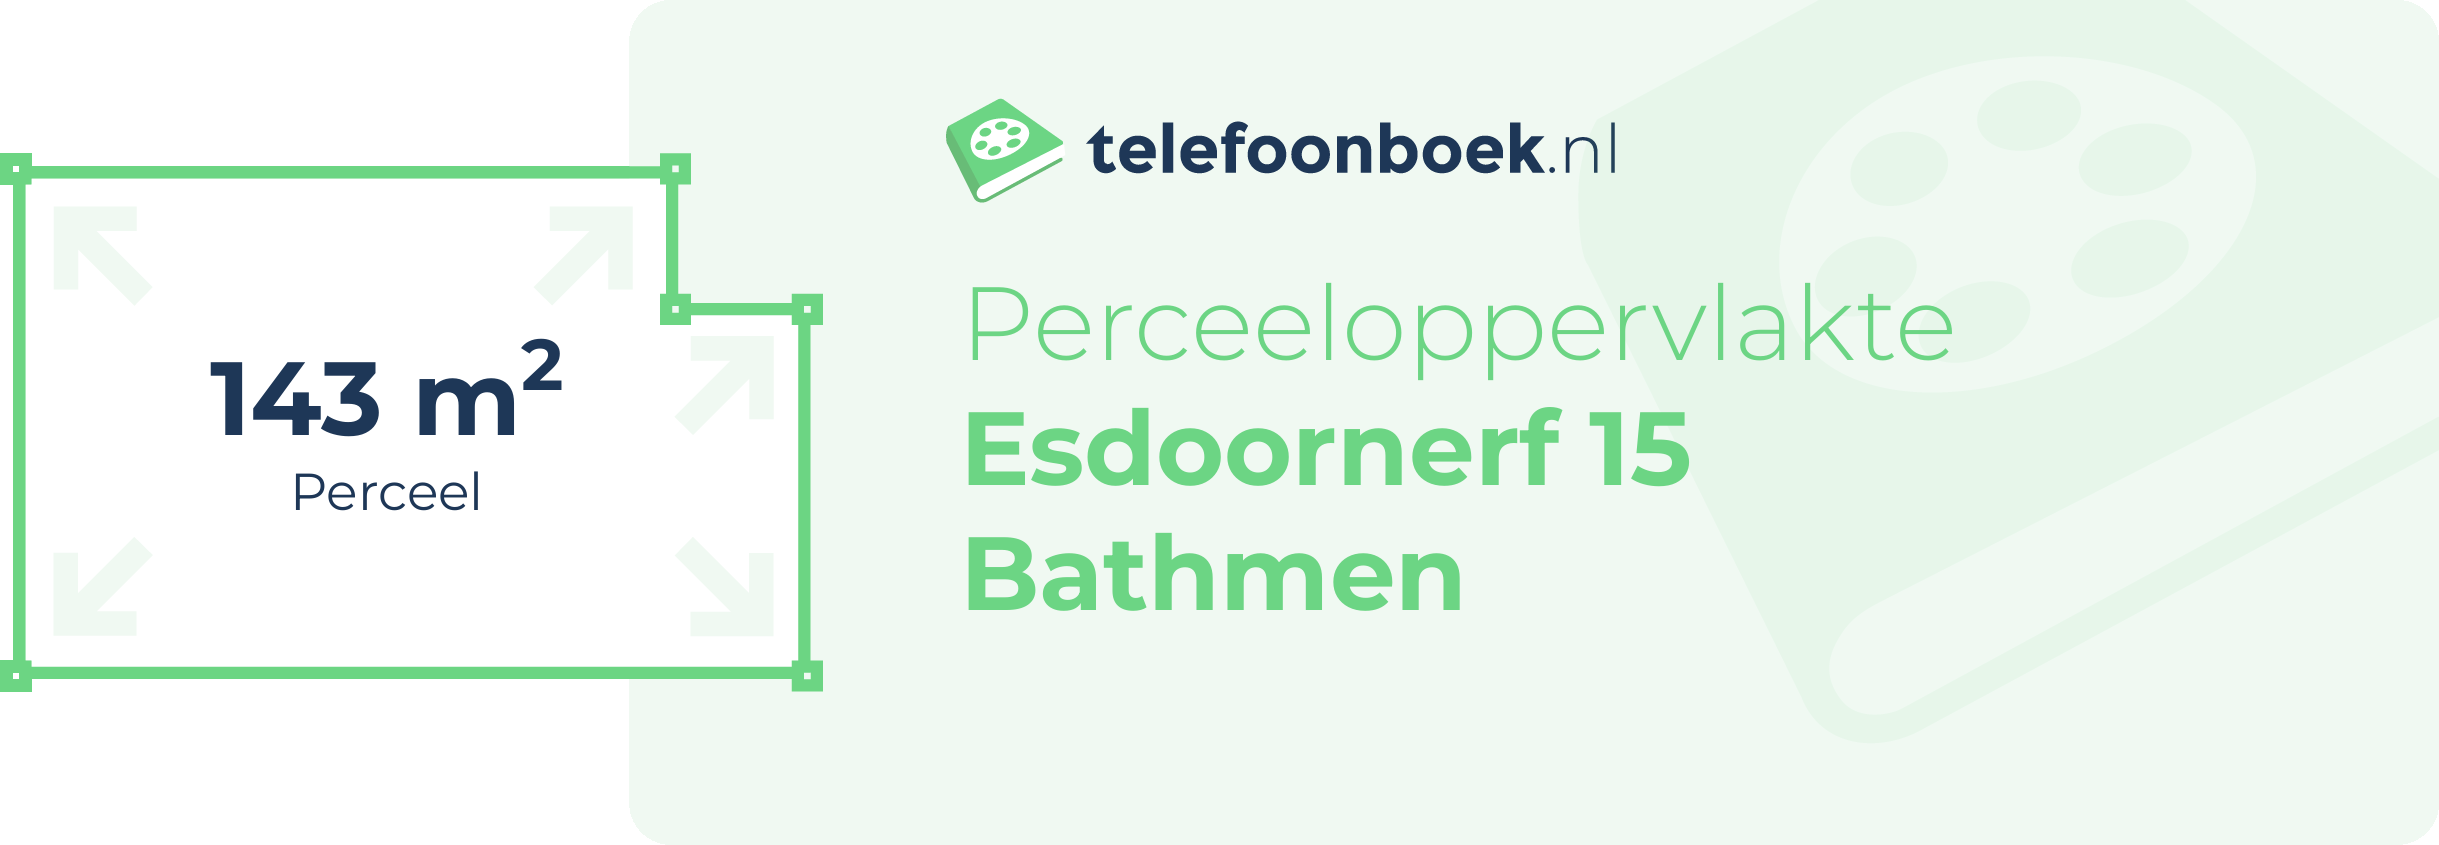 Perceeloppervlakte Esdoornerf 15 Bathmen